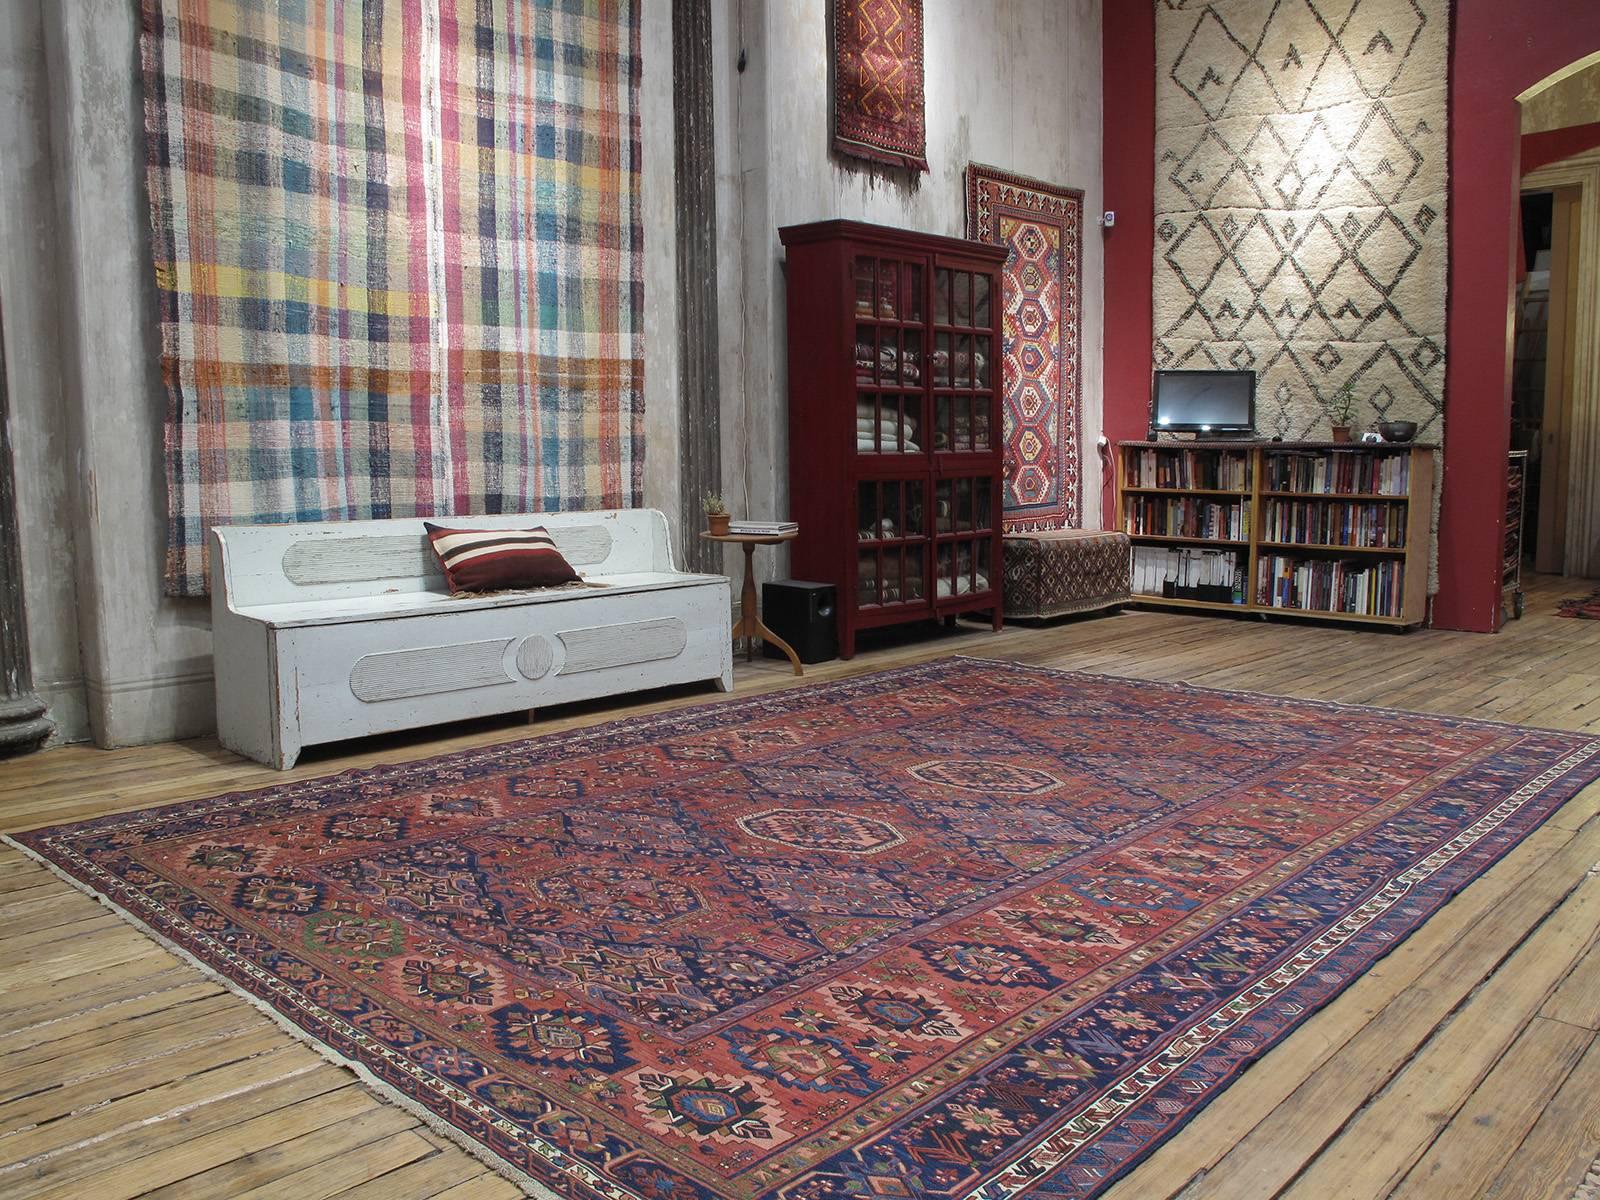 Fantastic Antique Caucasian Sumak carpet or rug. An impressive antique flat-weave carpet or rug from the Caucasus, woven in the intricate 